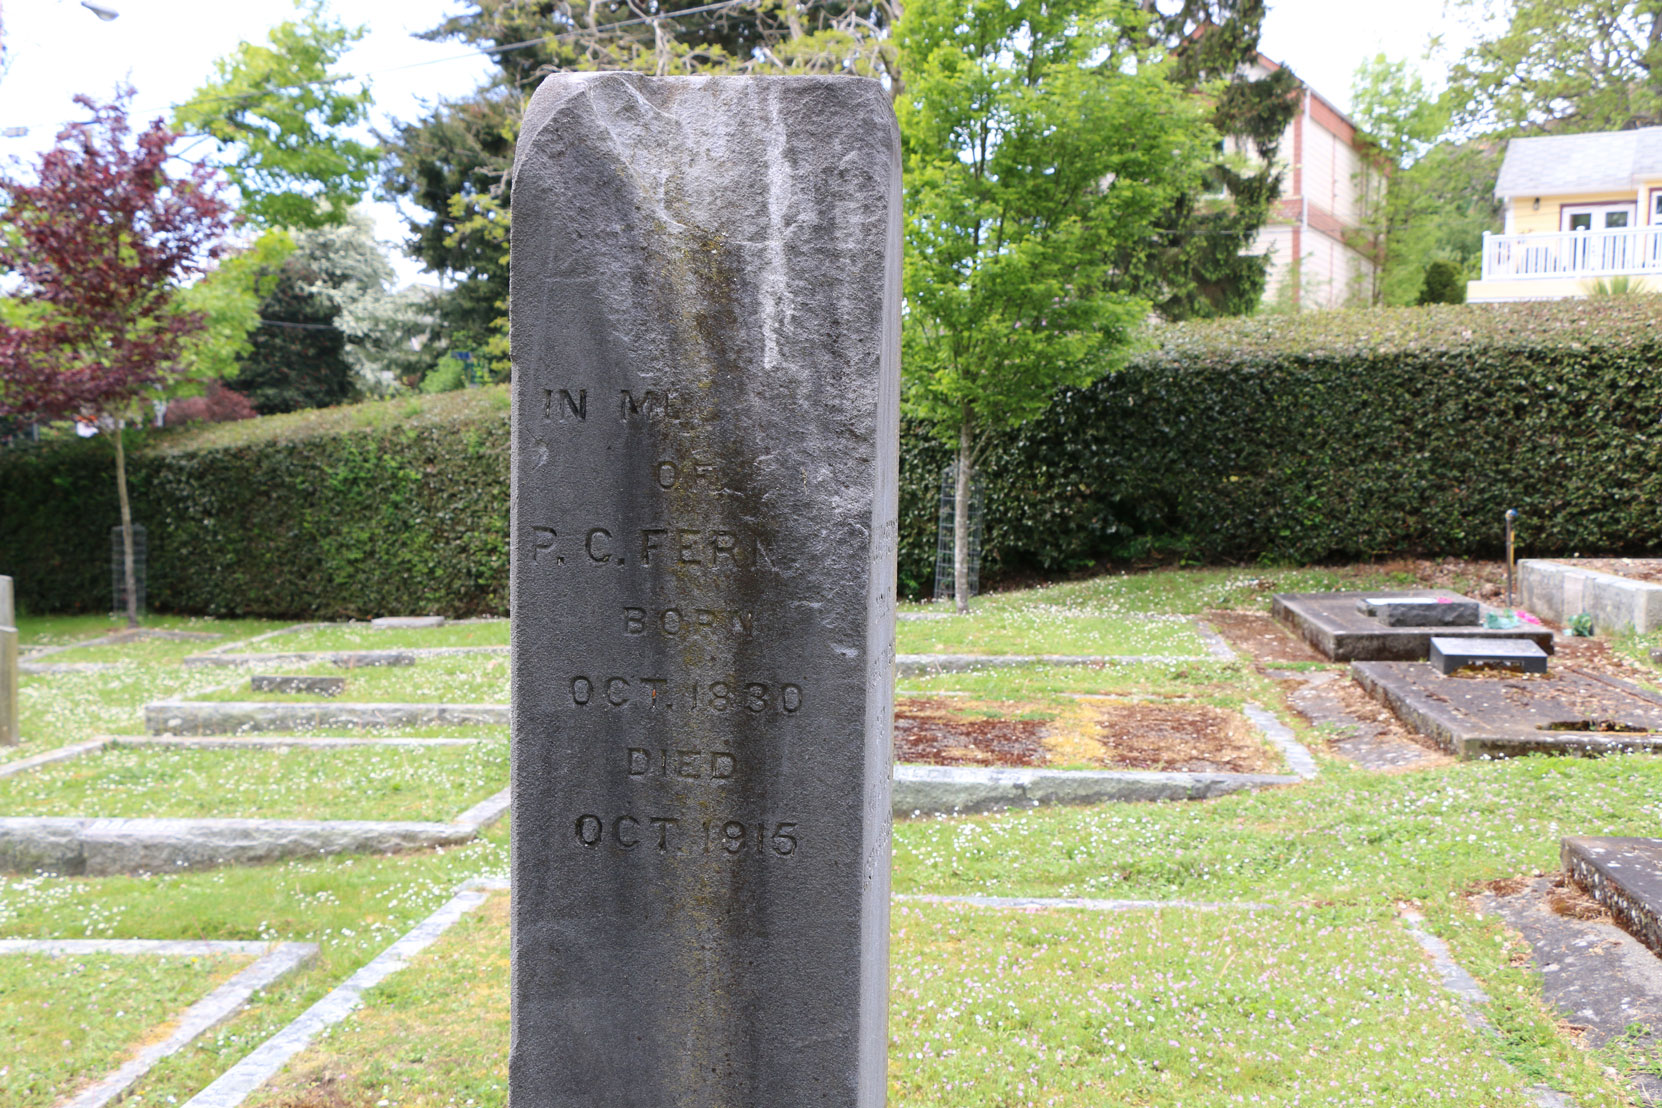 Damage to gravestone of Peter Fernie & William Fernie, Ross Bay Cemetery, Victoria, B.C. (photo by Mark Anderson)